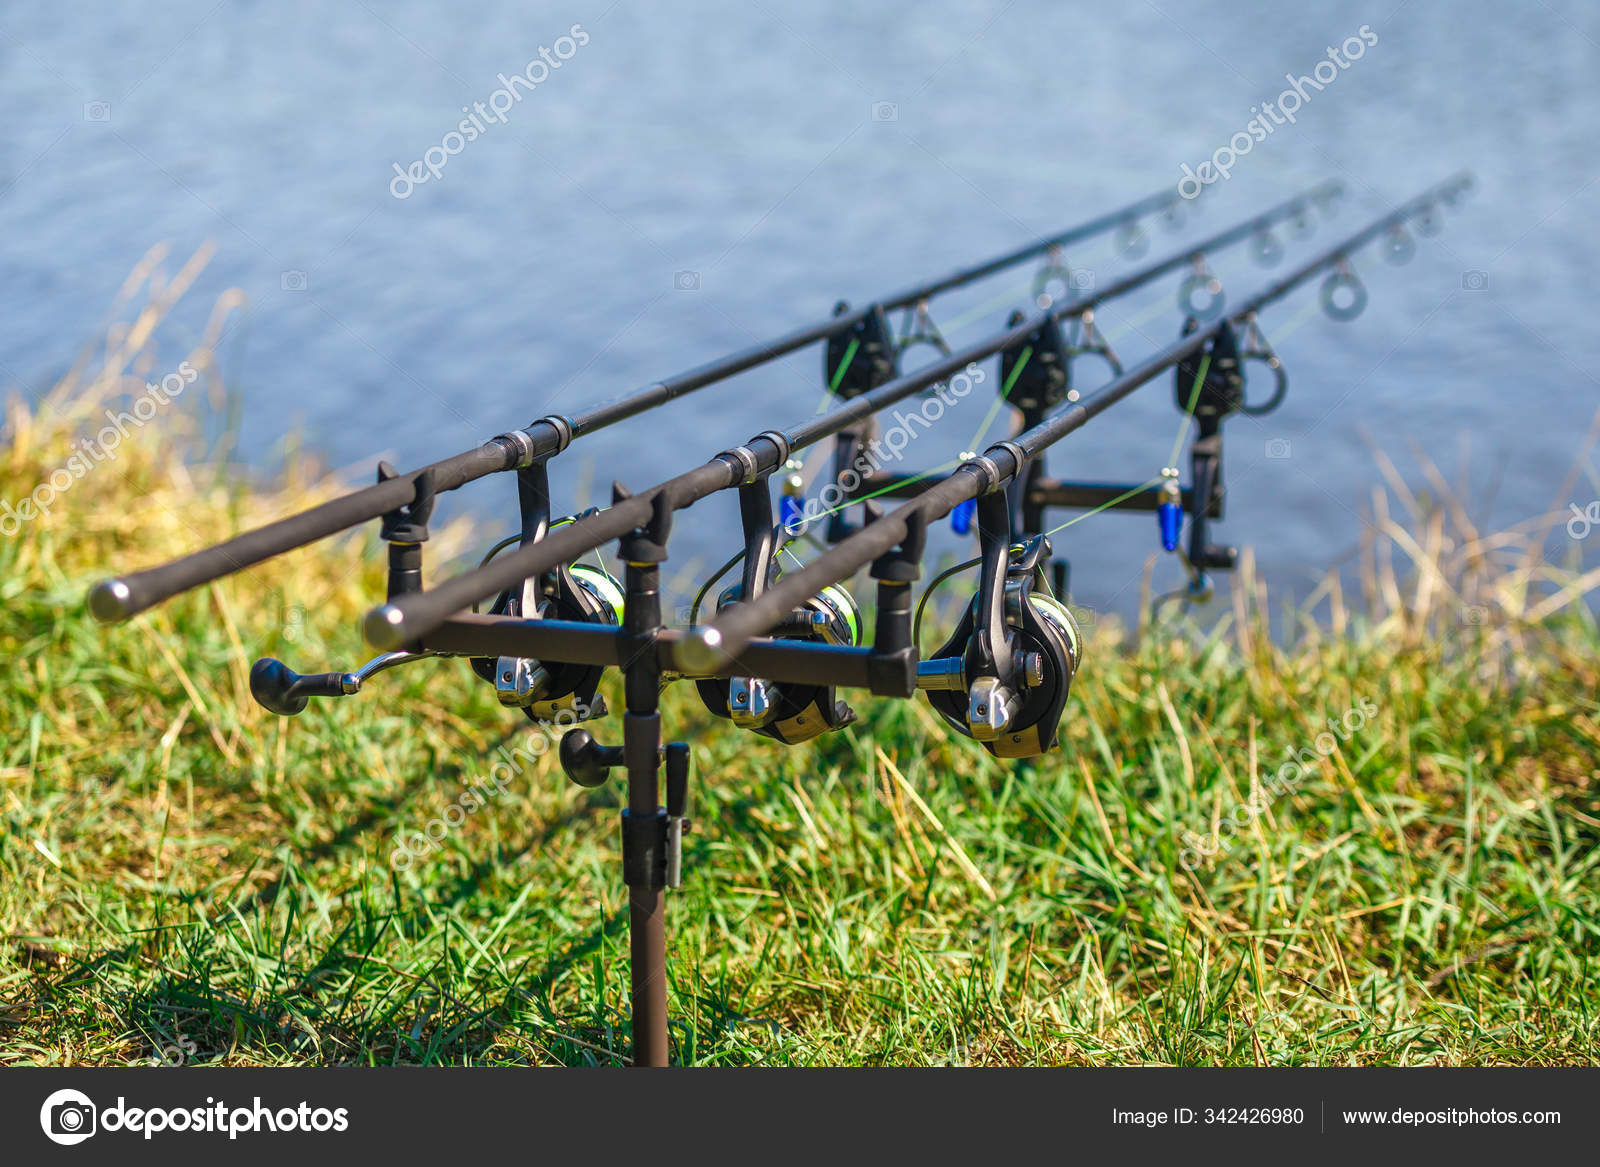 Aventuras de pesca, pesca de carpas. Cañas de pescar de carpa montadas en  ho — Foto de stock #342426980 © bukhta79